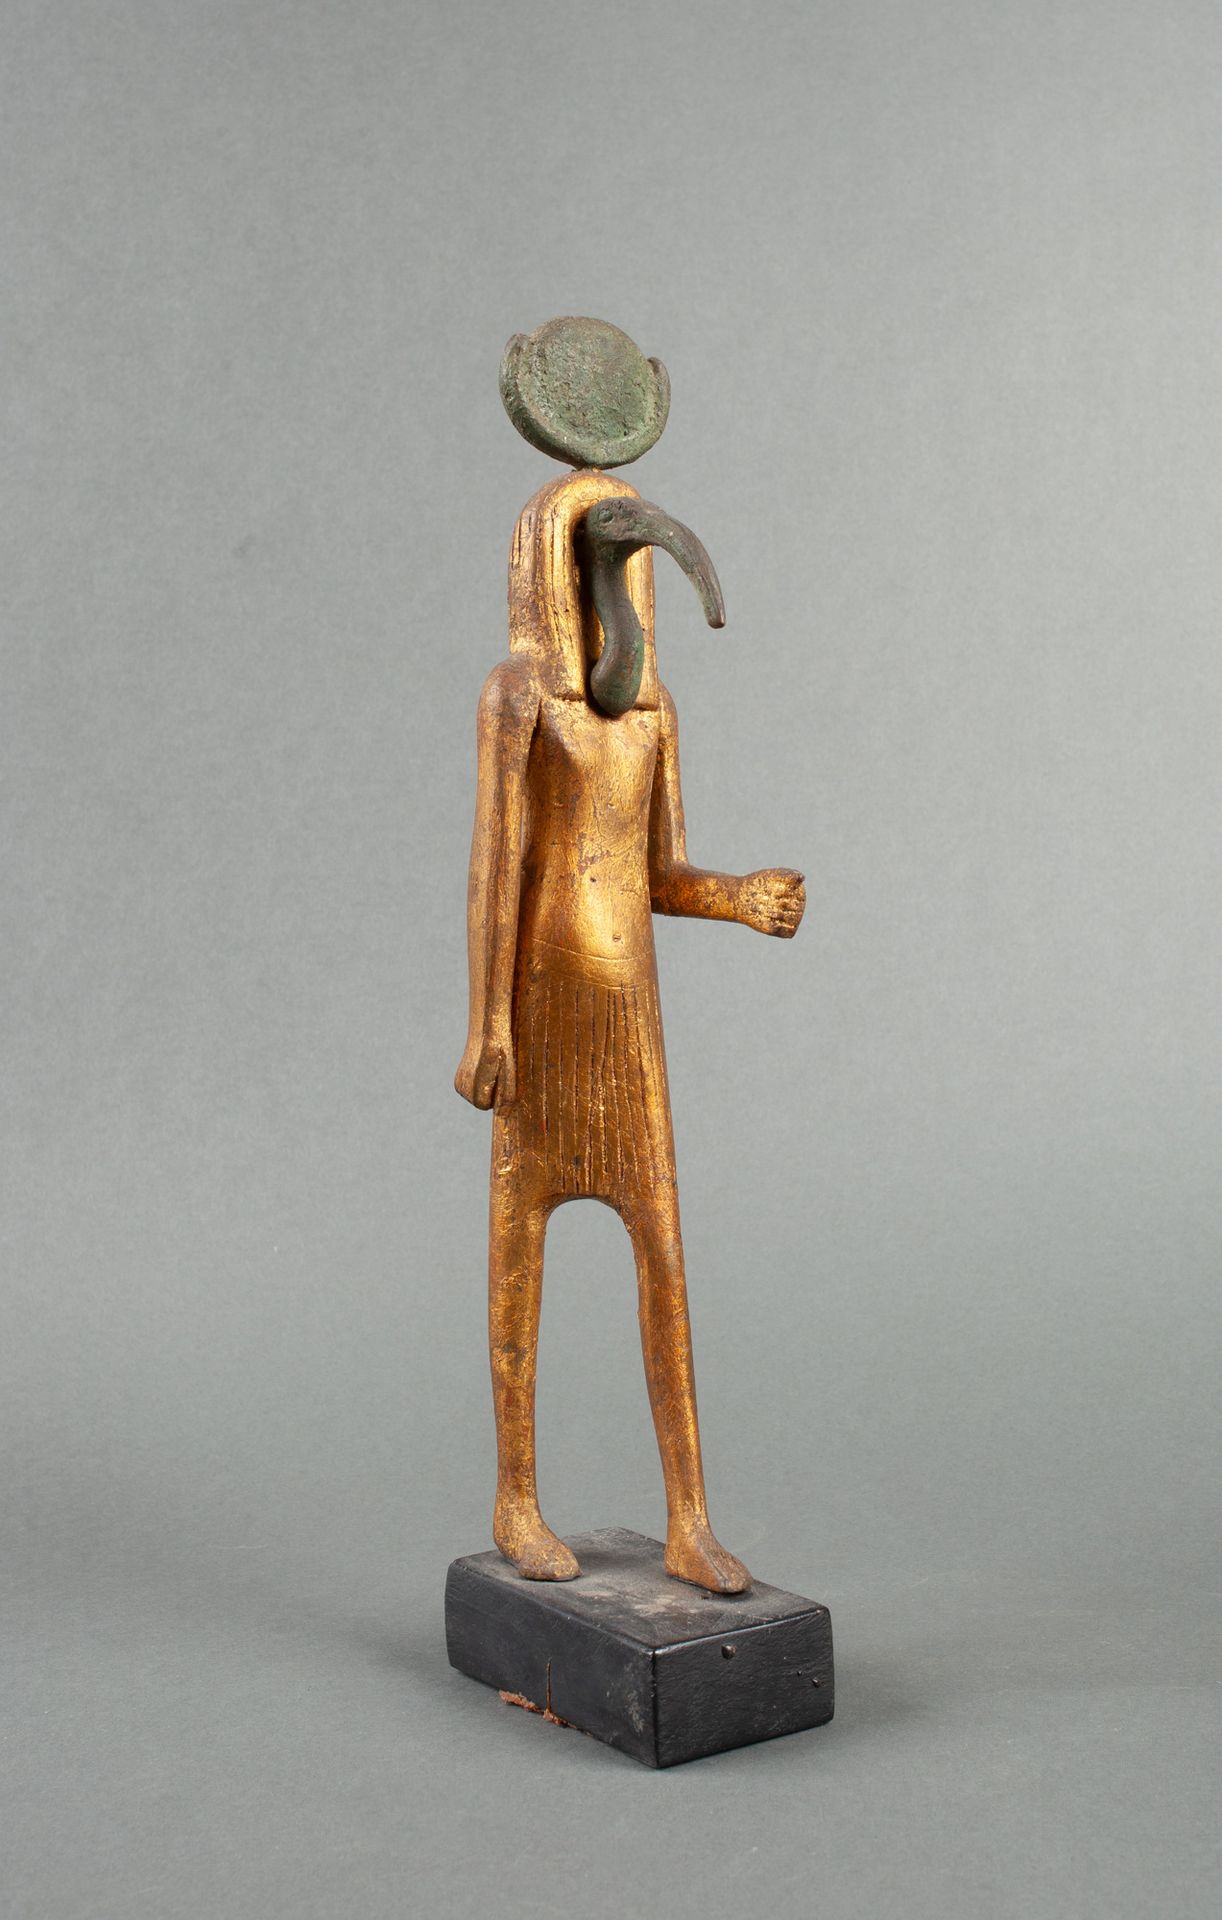 Null 代表托斯神行走的镀金雕像。只有鸟嘴和青铜月盘可能是古董。

高：33厘米